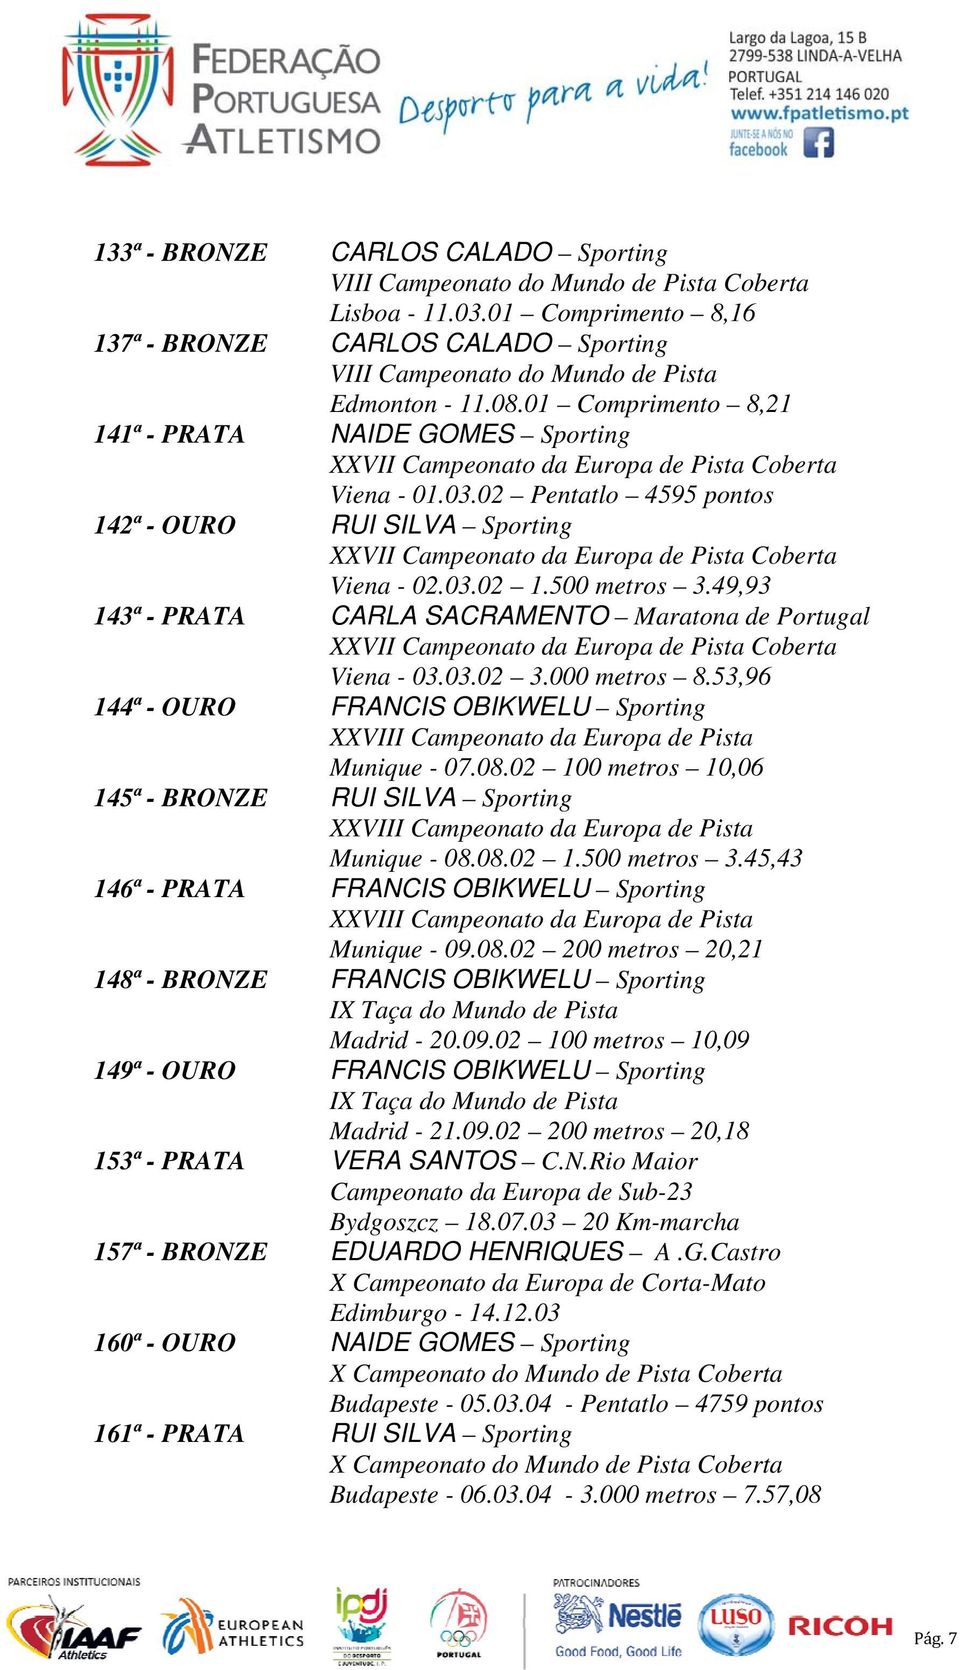 02 Pentatlo 4595 pontos 142ª - RUI SILVA Sporting XXVII Campeonato da Europa de Pista Coberta Viena - 02.03.02 1.500 metros 3.